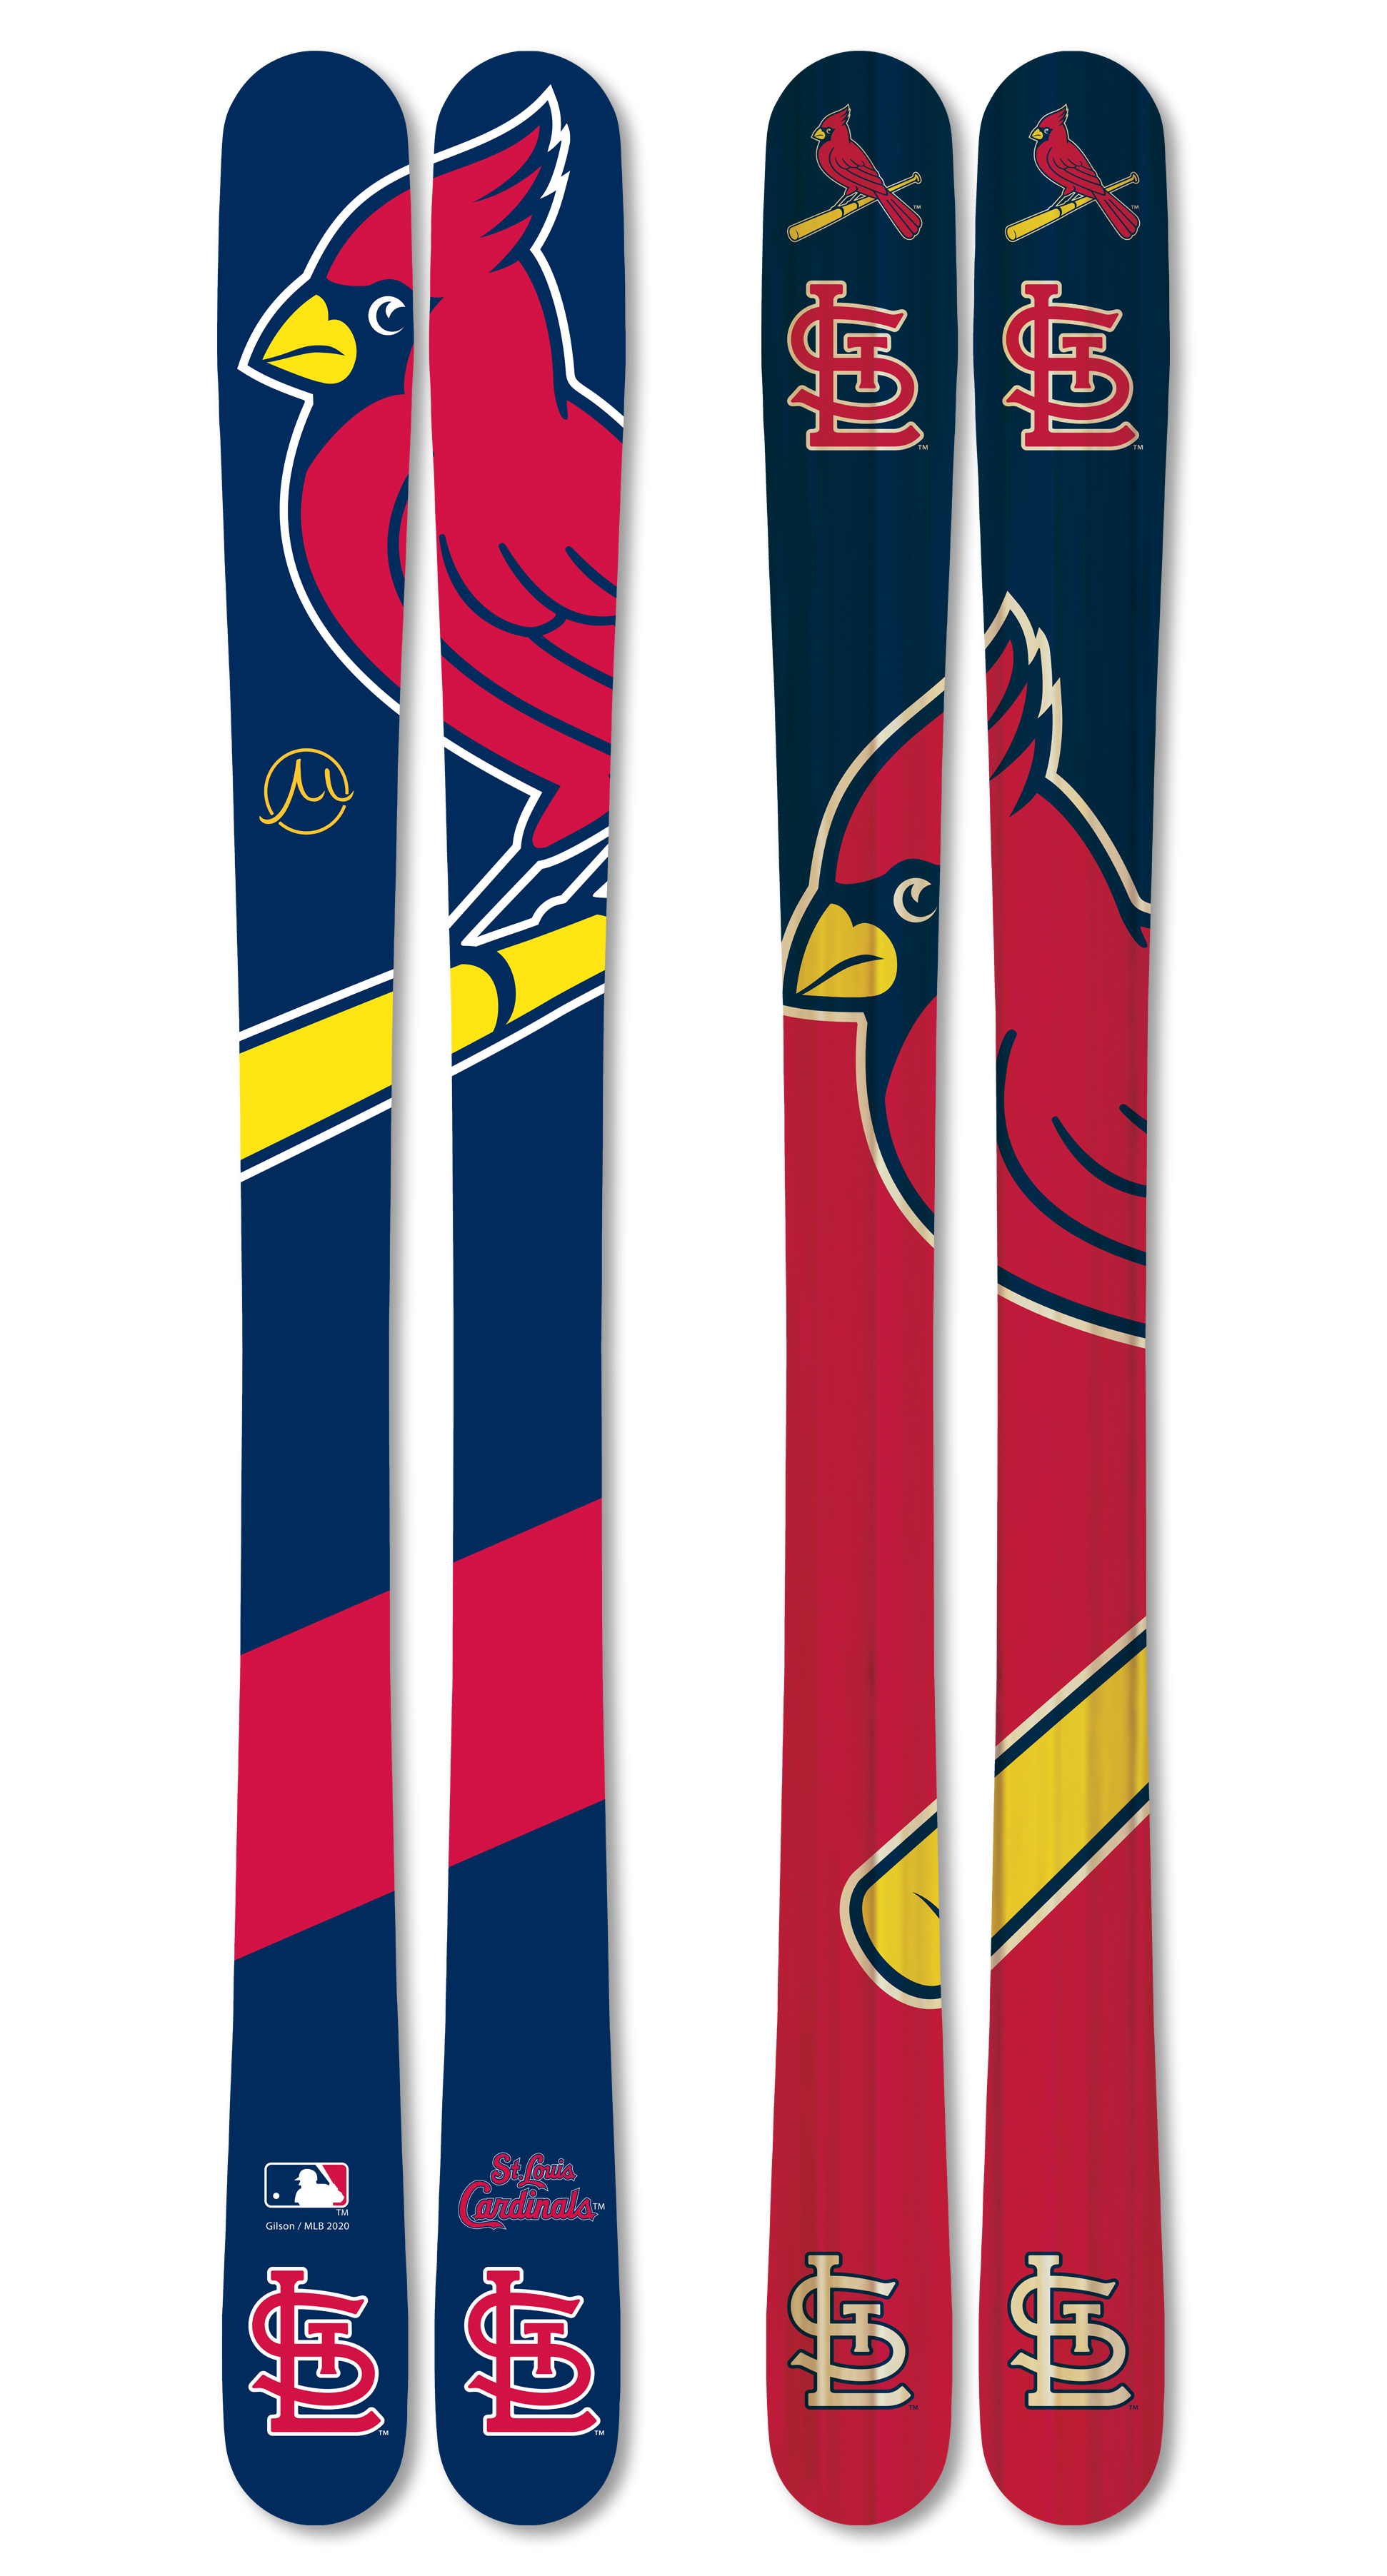 Mlb st louis cardinals skis large